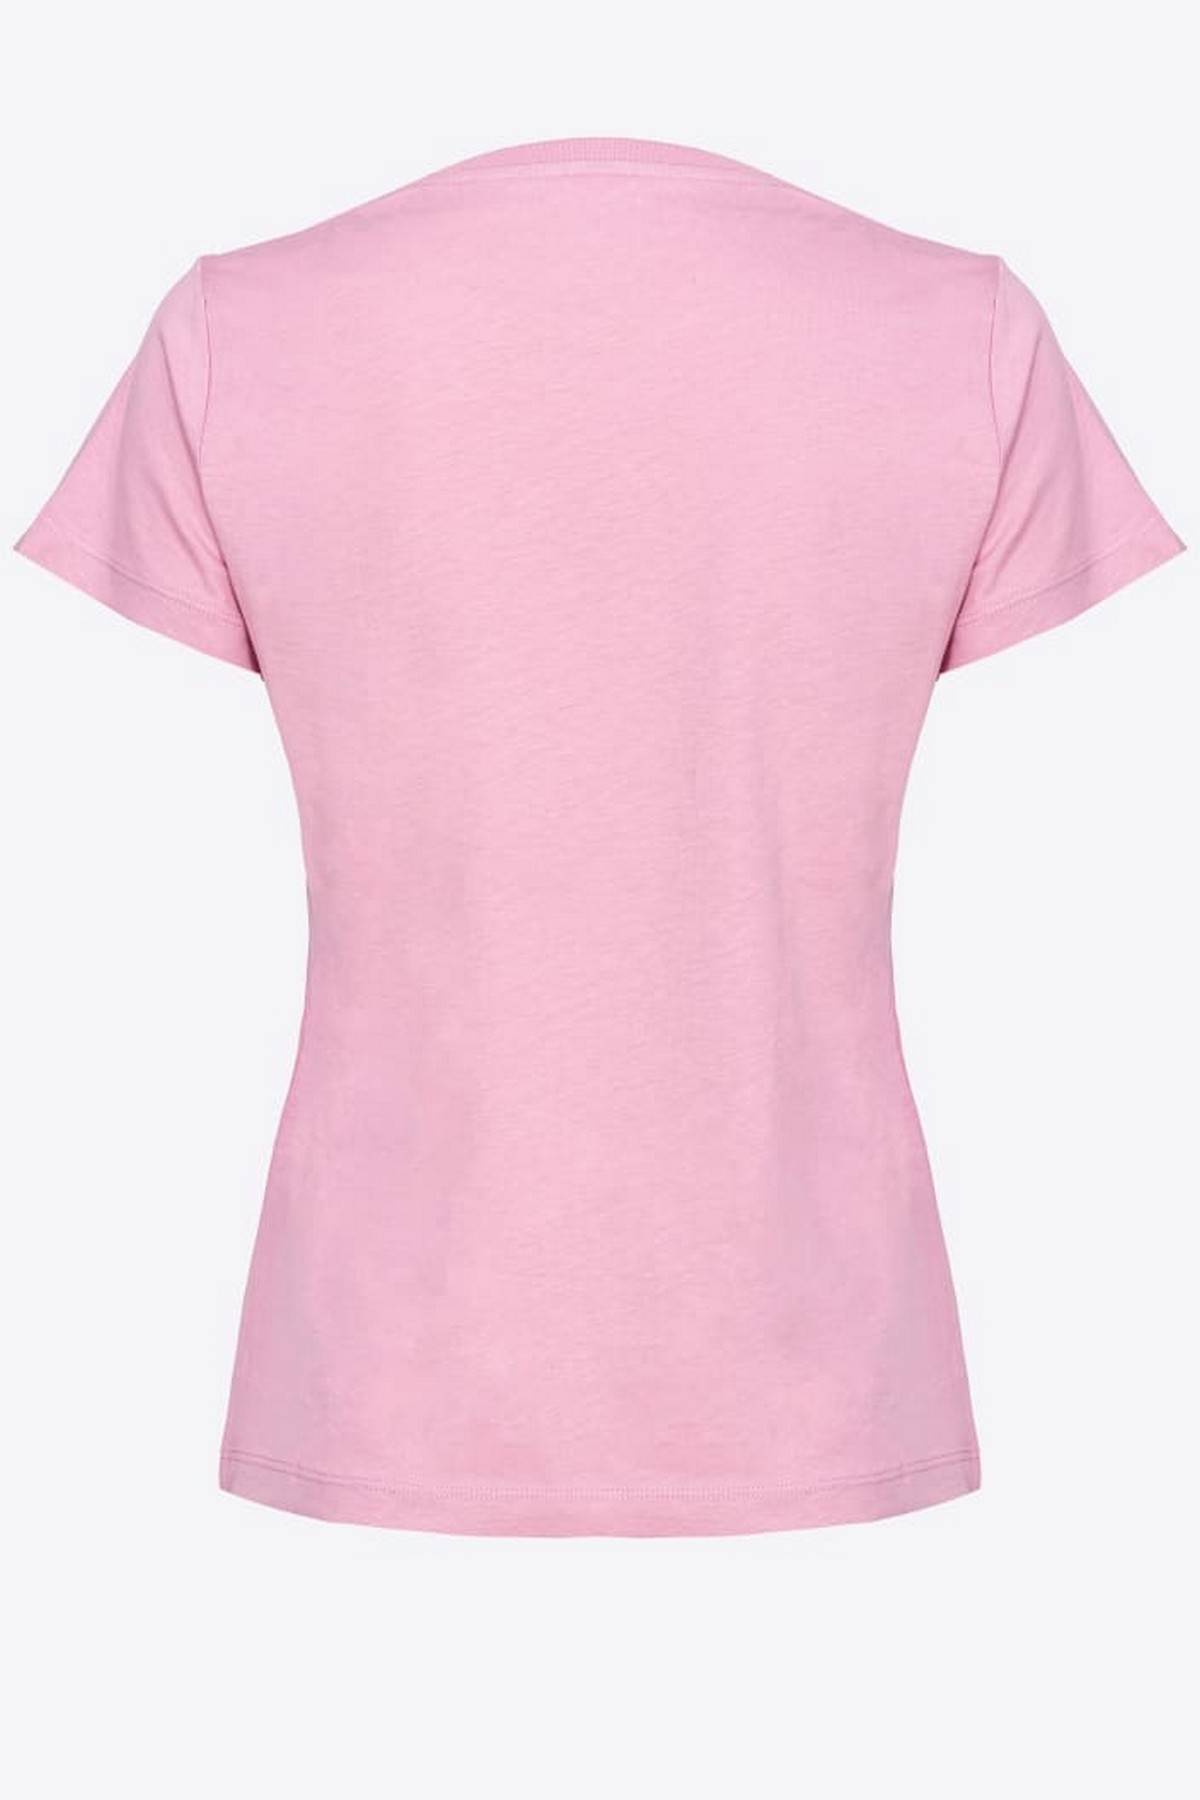 Pinko - Bussolotto 100355 - T-shirt Pinko logo roze